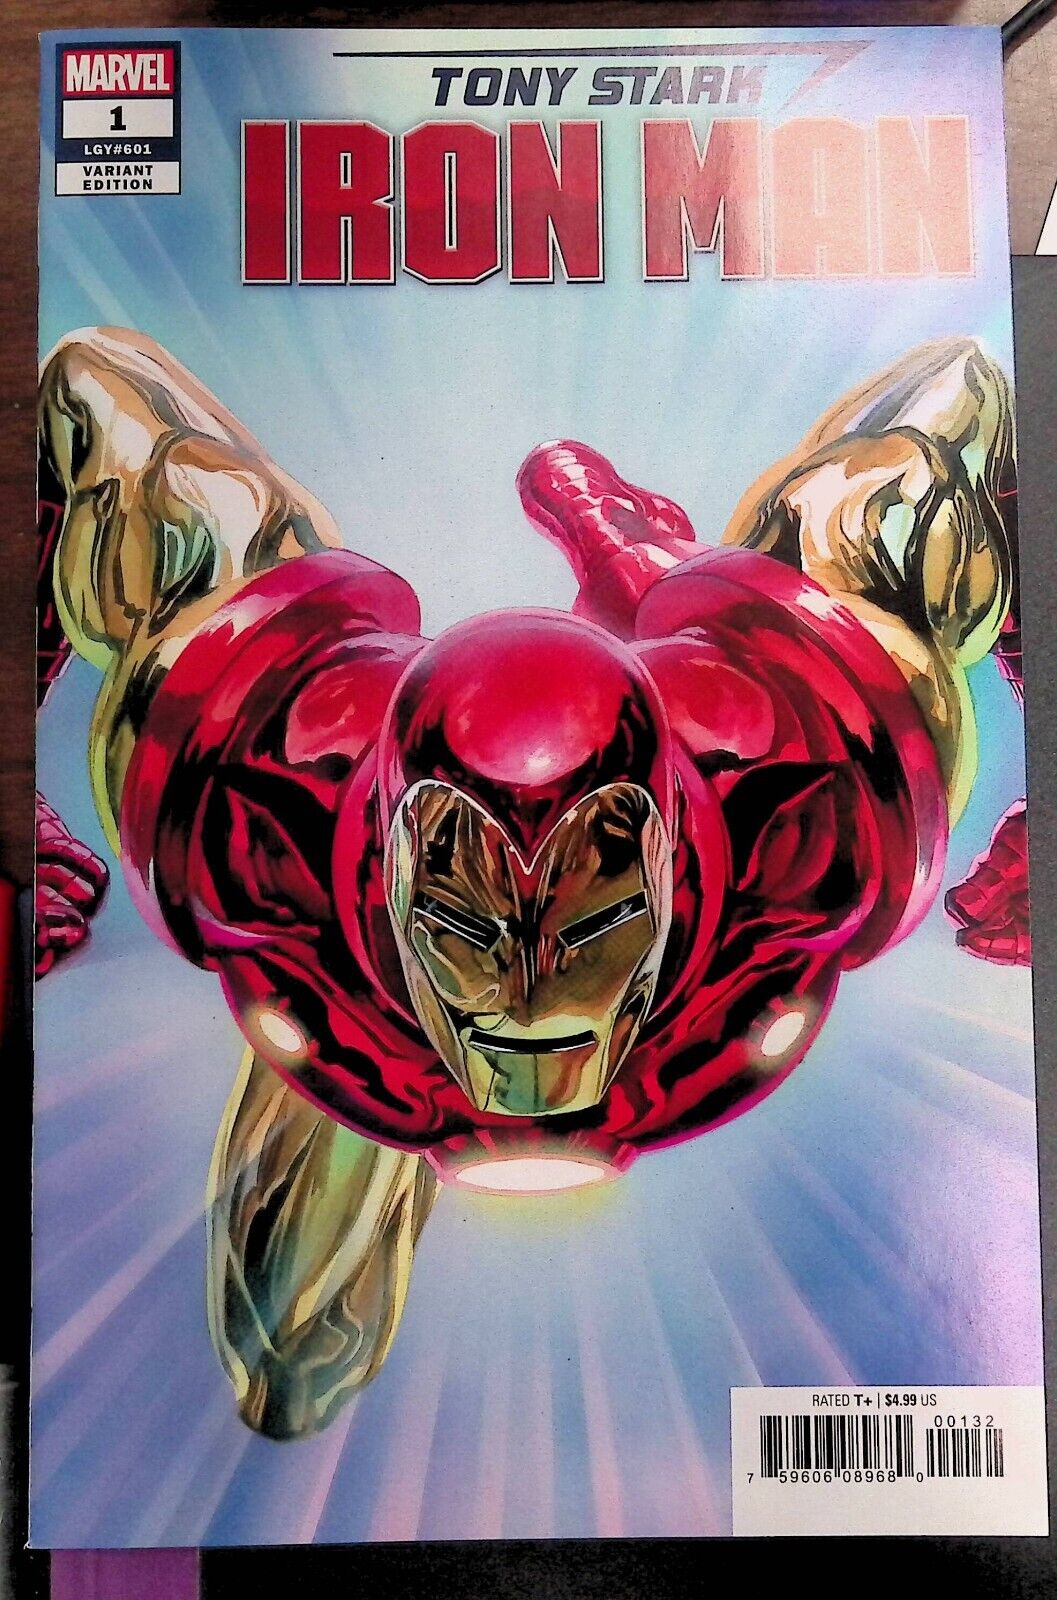 Tony Stark: Iron Man #1 (2018) 1:50 Alex Ross variant